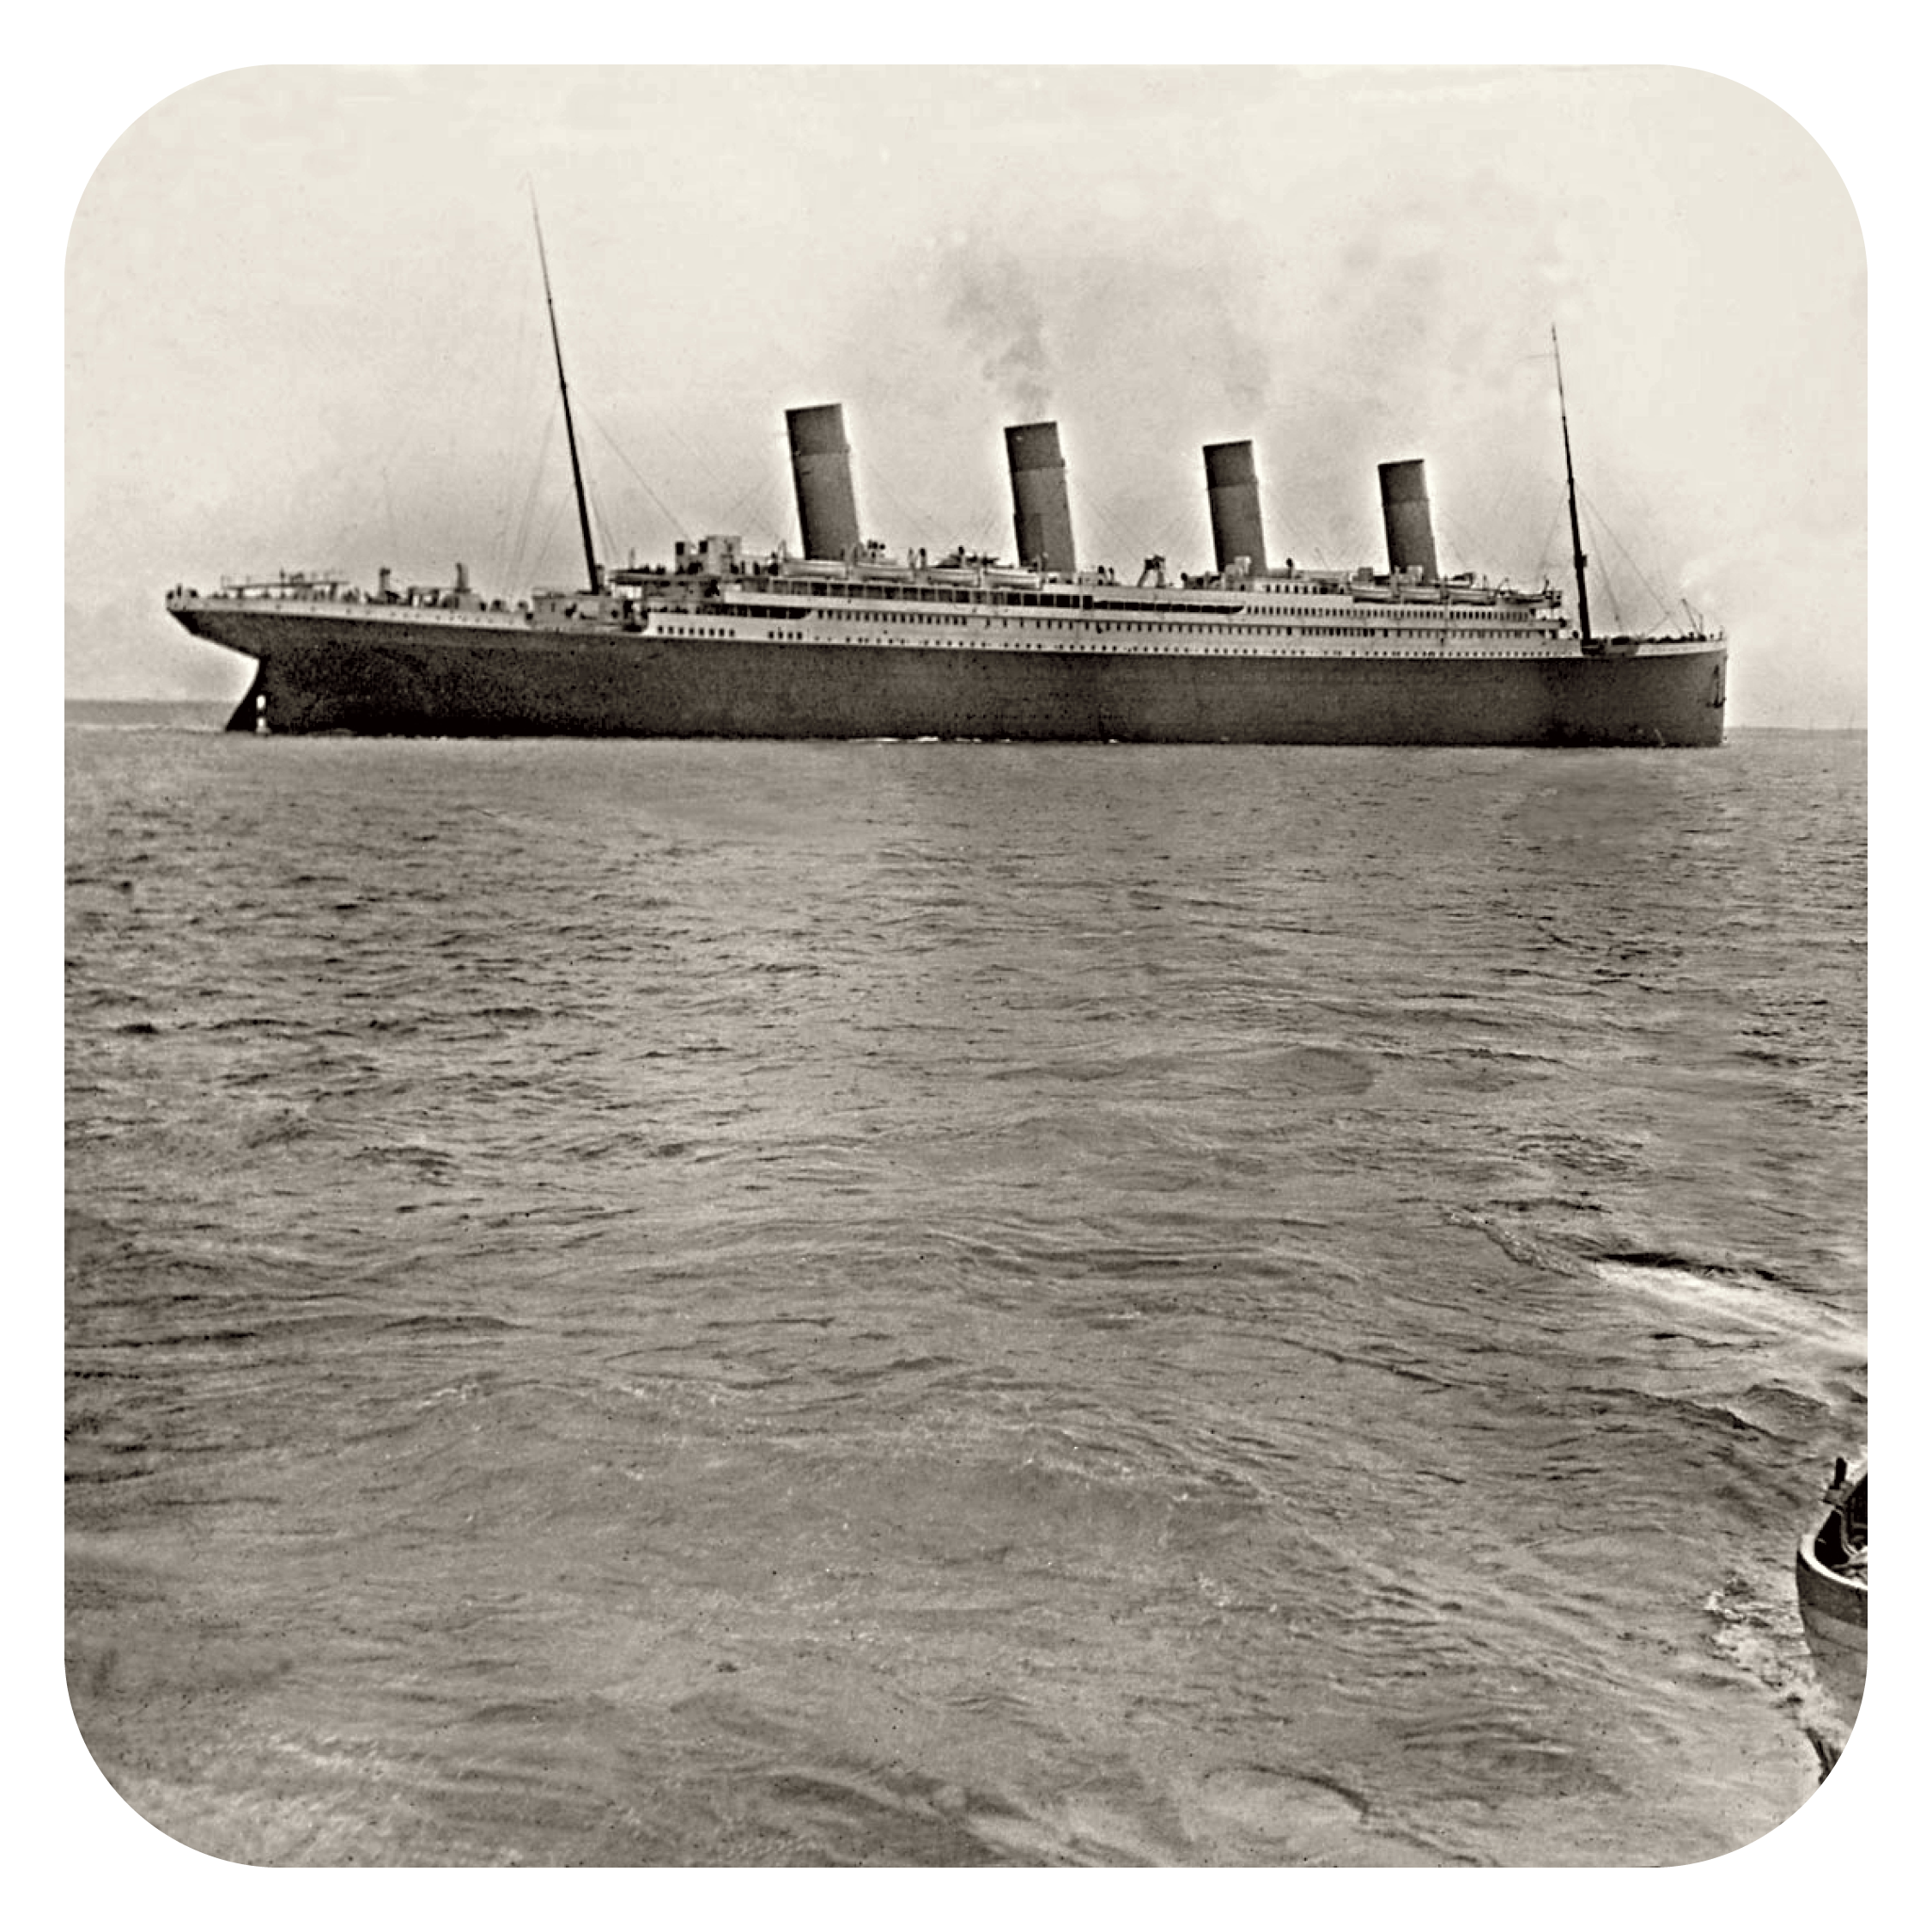 11:30 p.m. Queensland, Ireland is the final European stop for Titanic